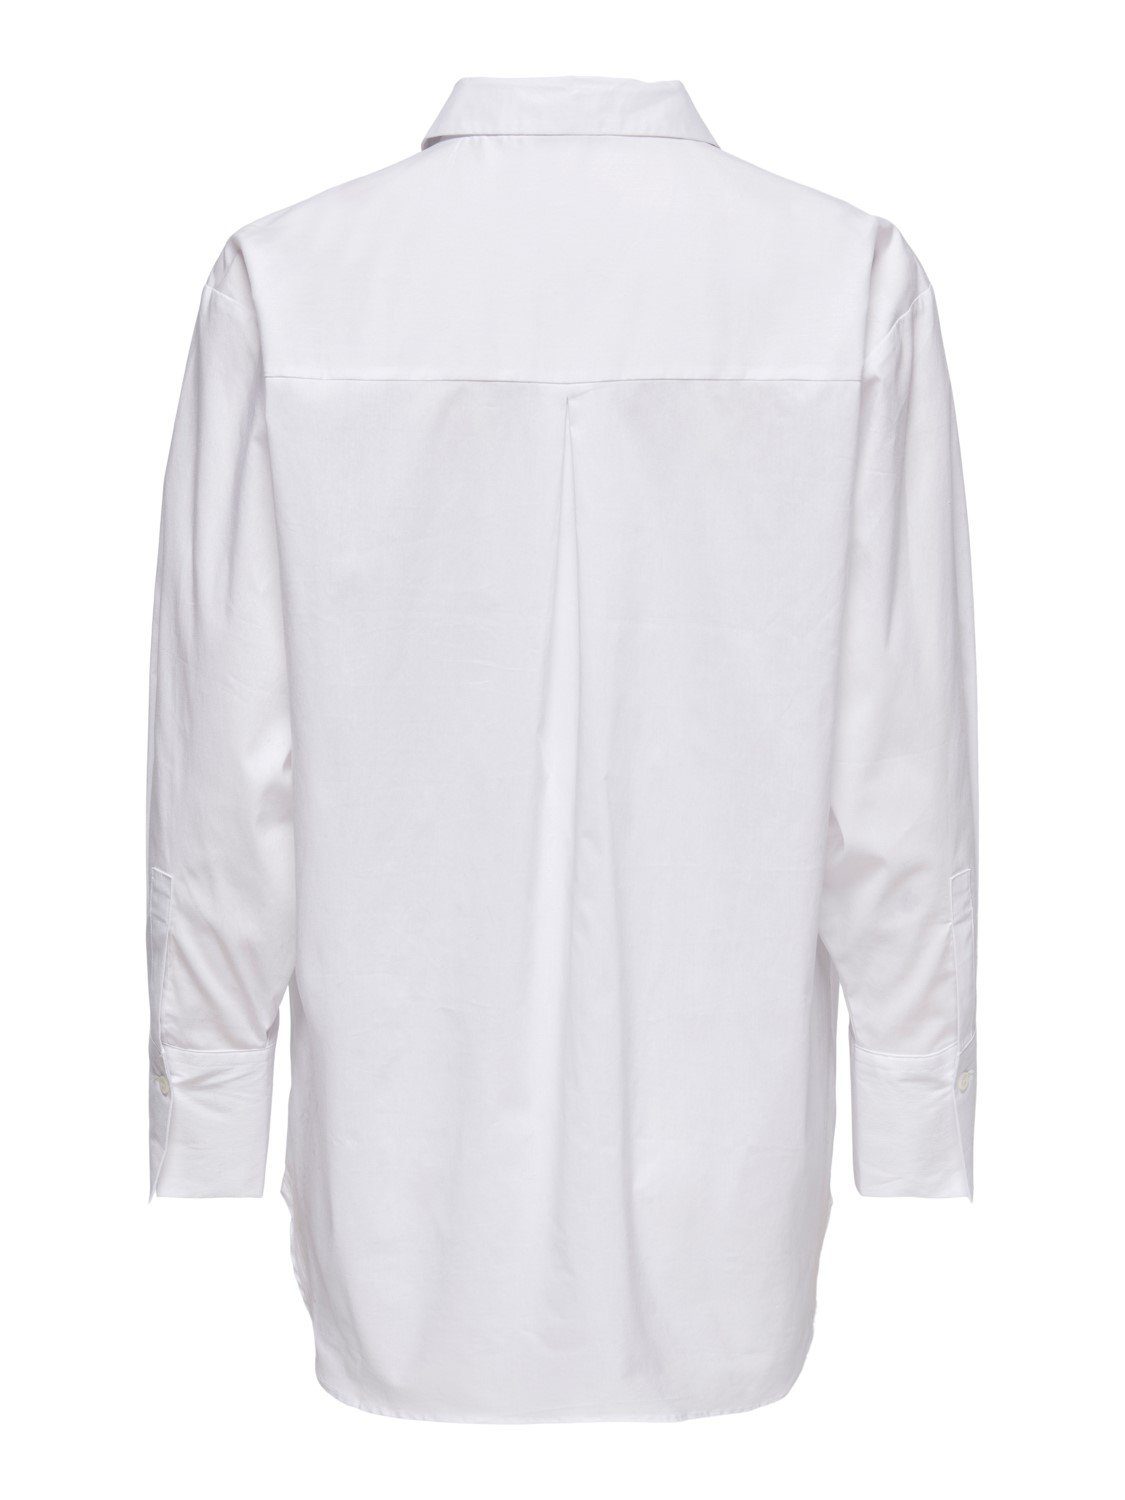 Blusenshirt Bluse JDY Hemd de Design 3699 YONG (1-tlg) Shirt Weiß JACQUELINE in Freizeit